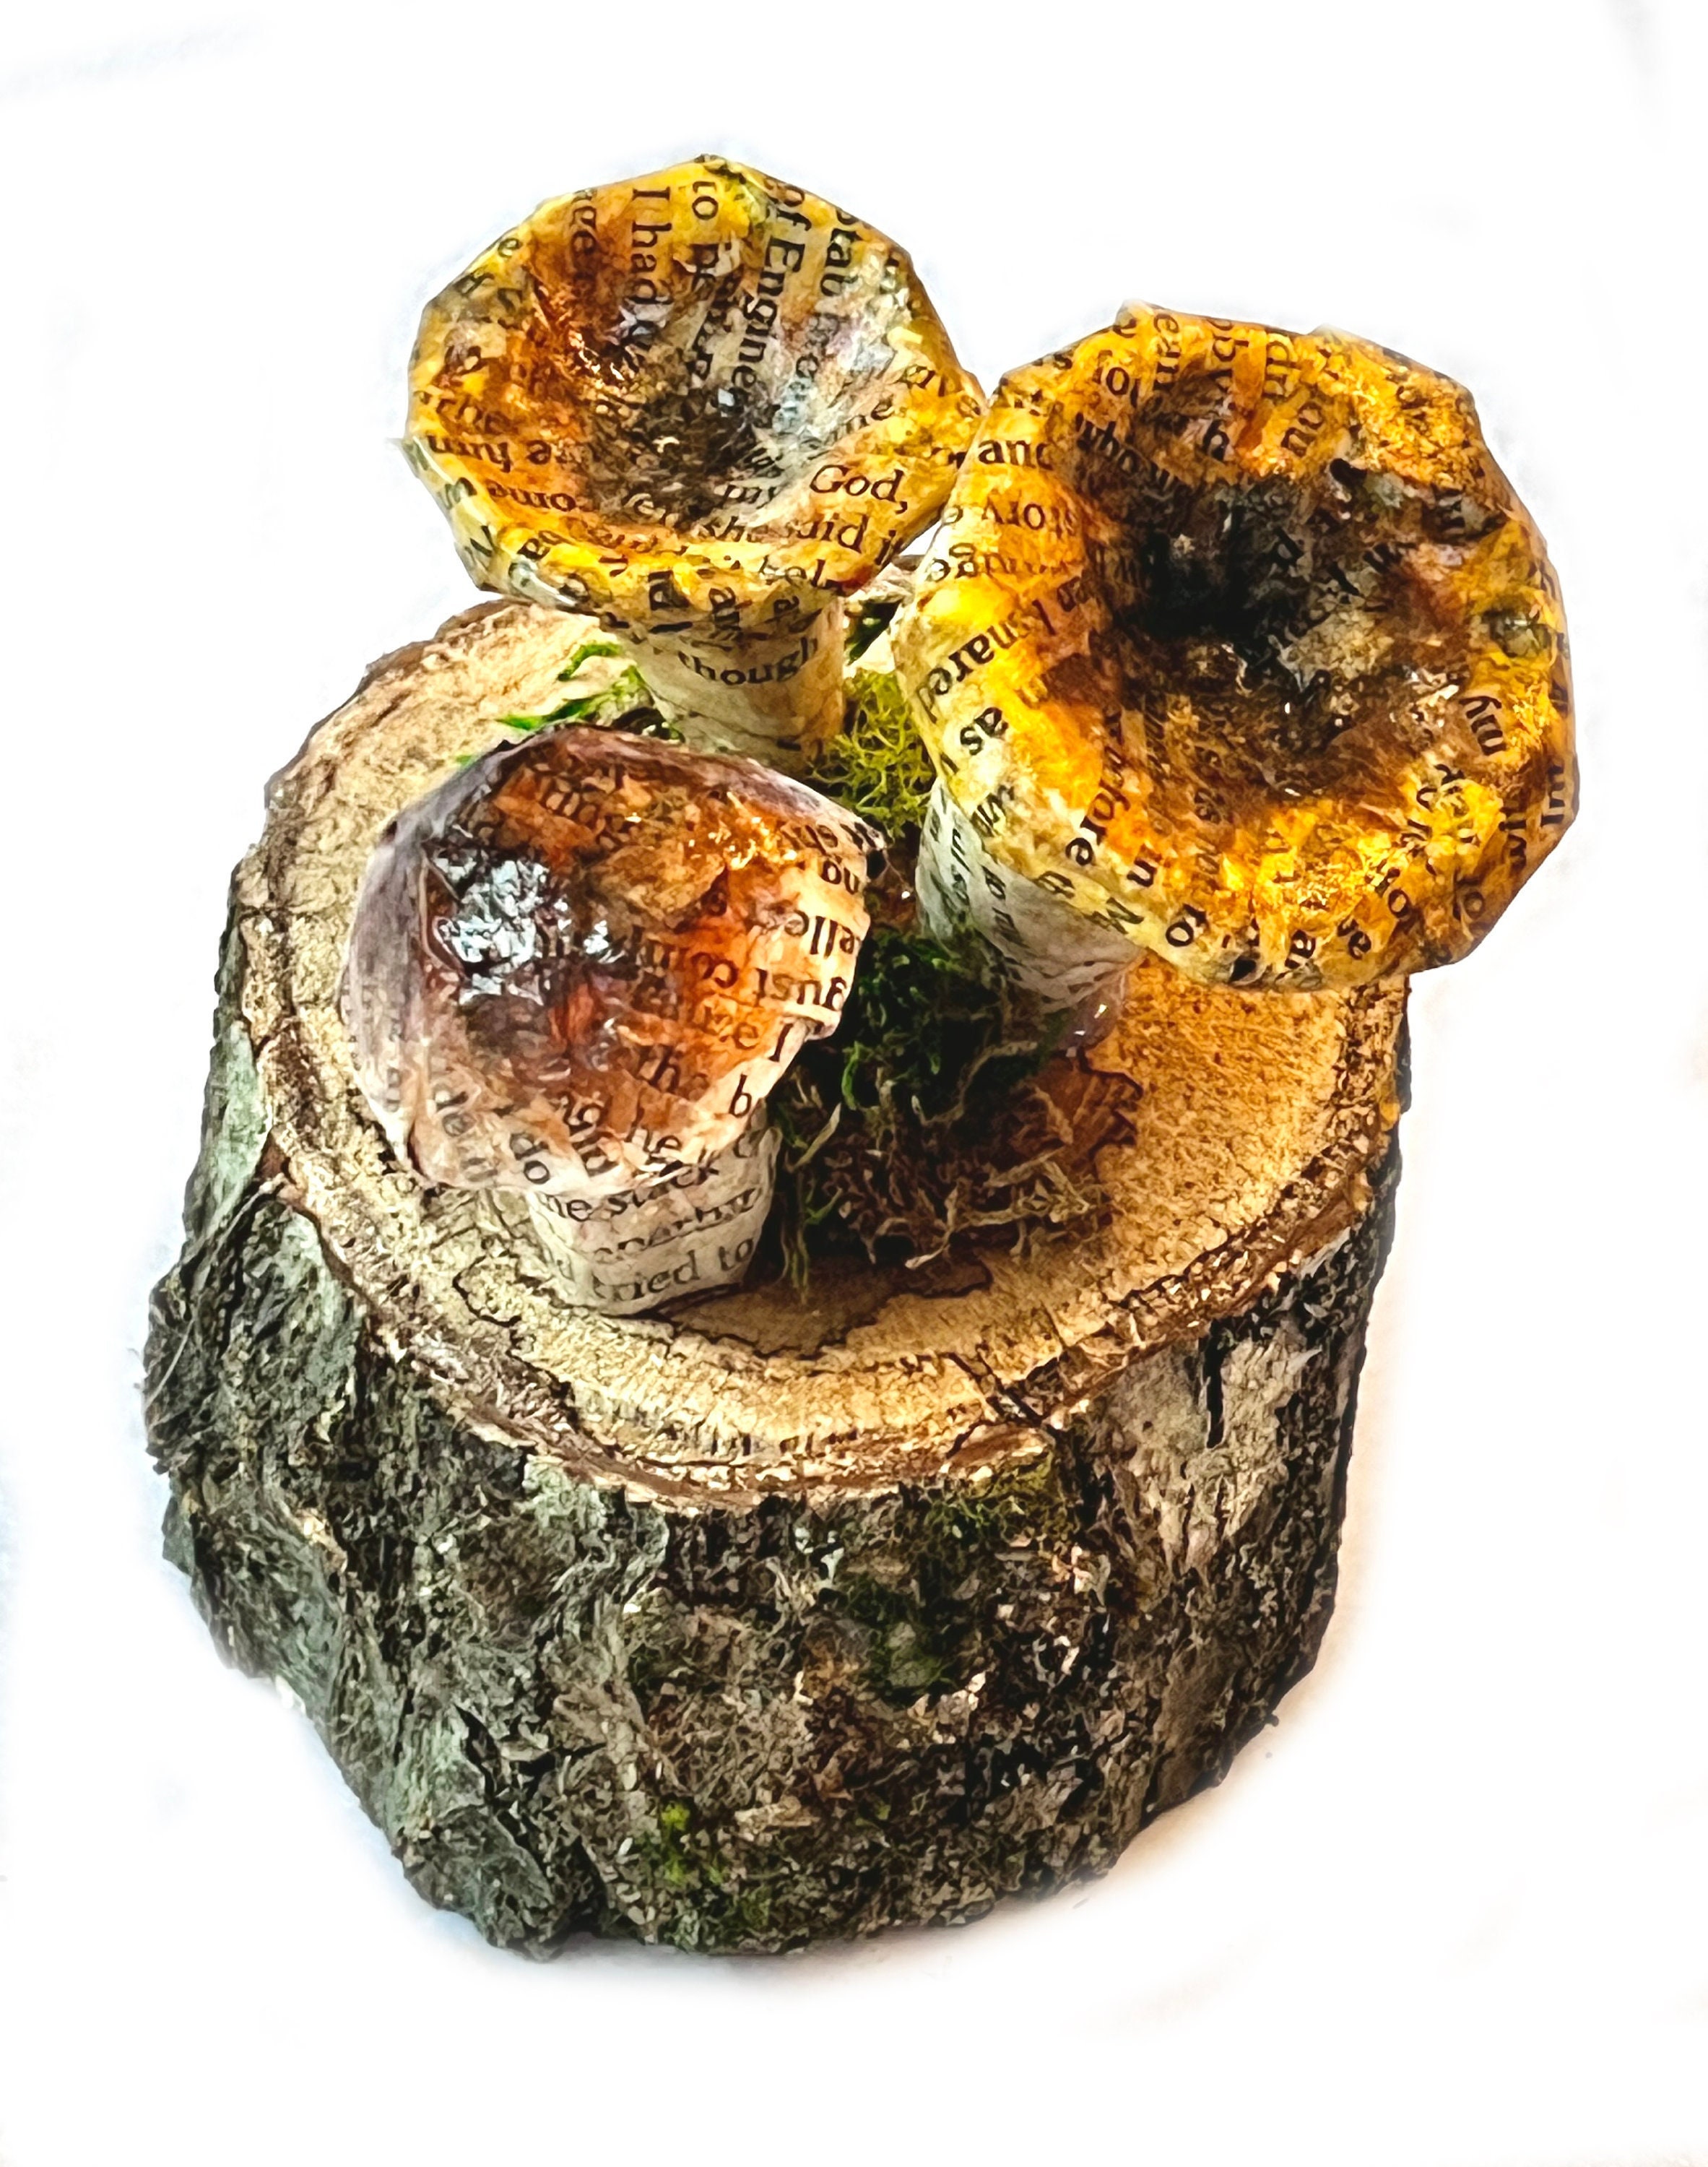 Handmade Paper Mache Champignon Mushroom Sculptures by French